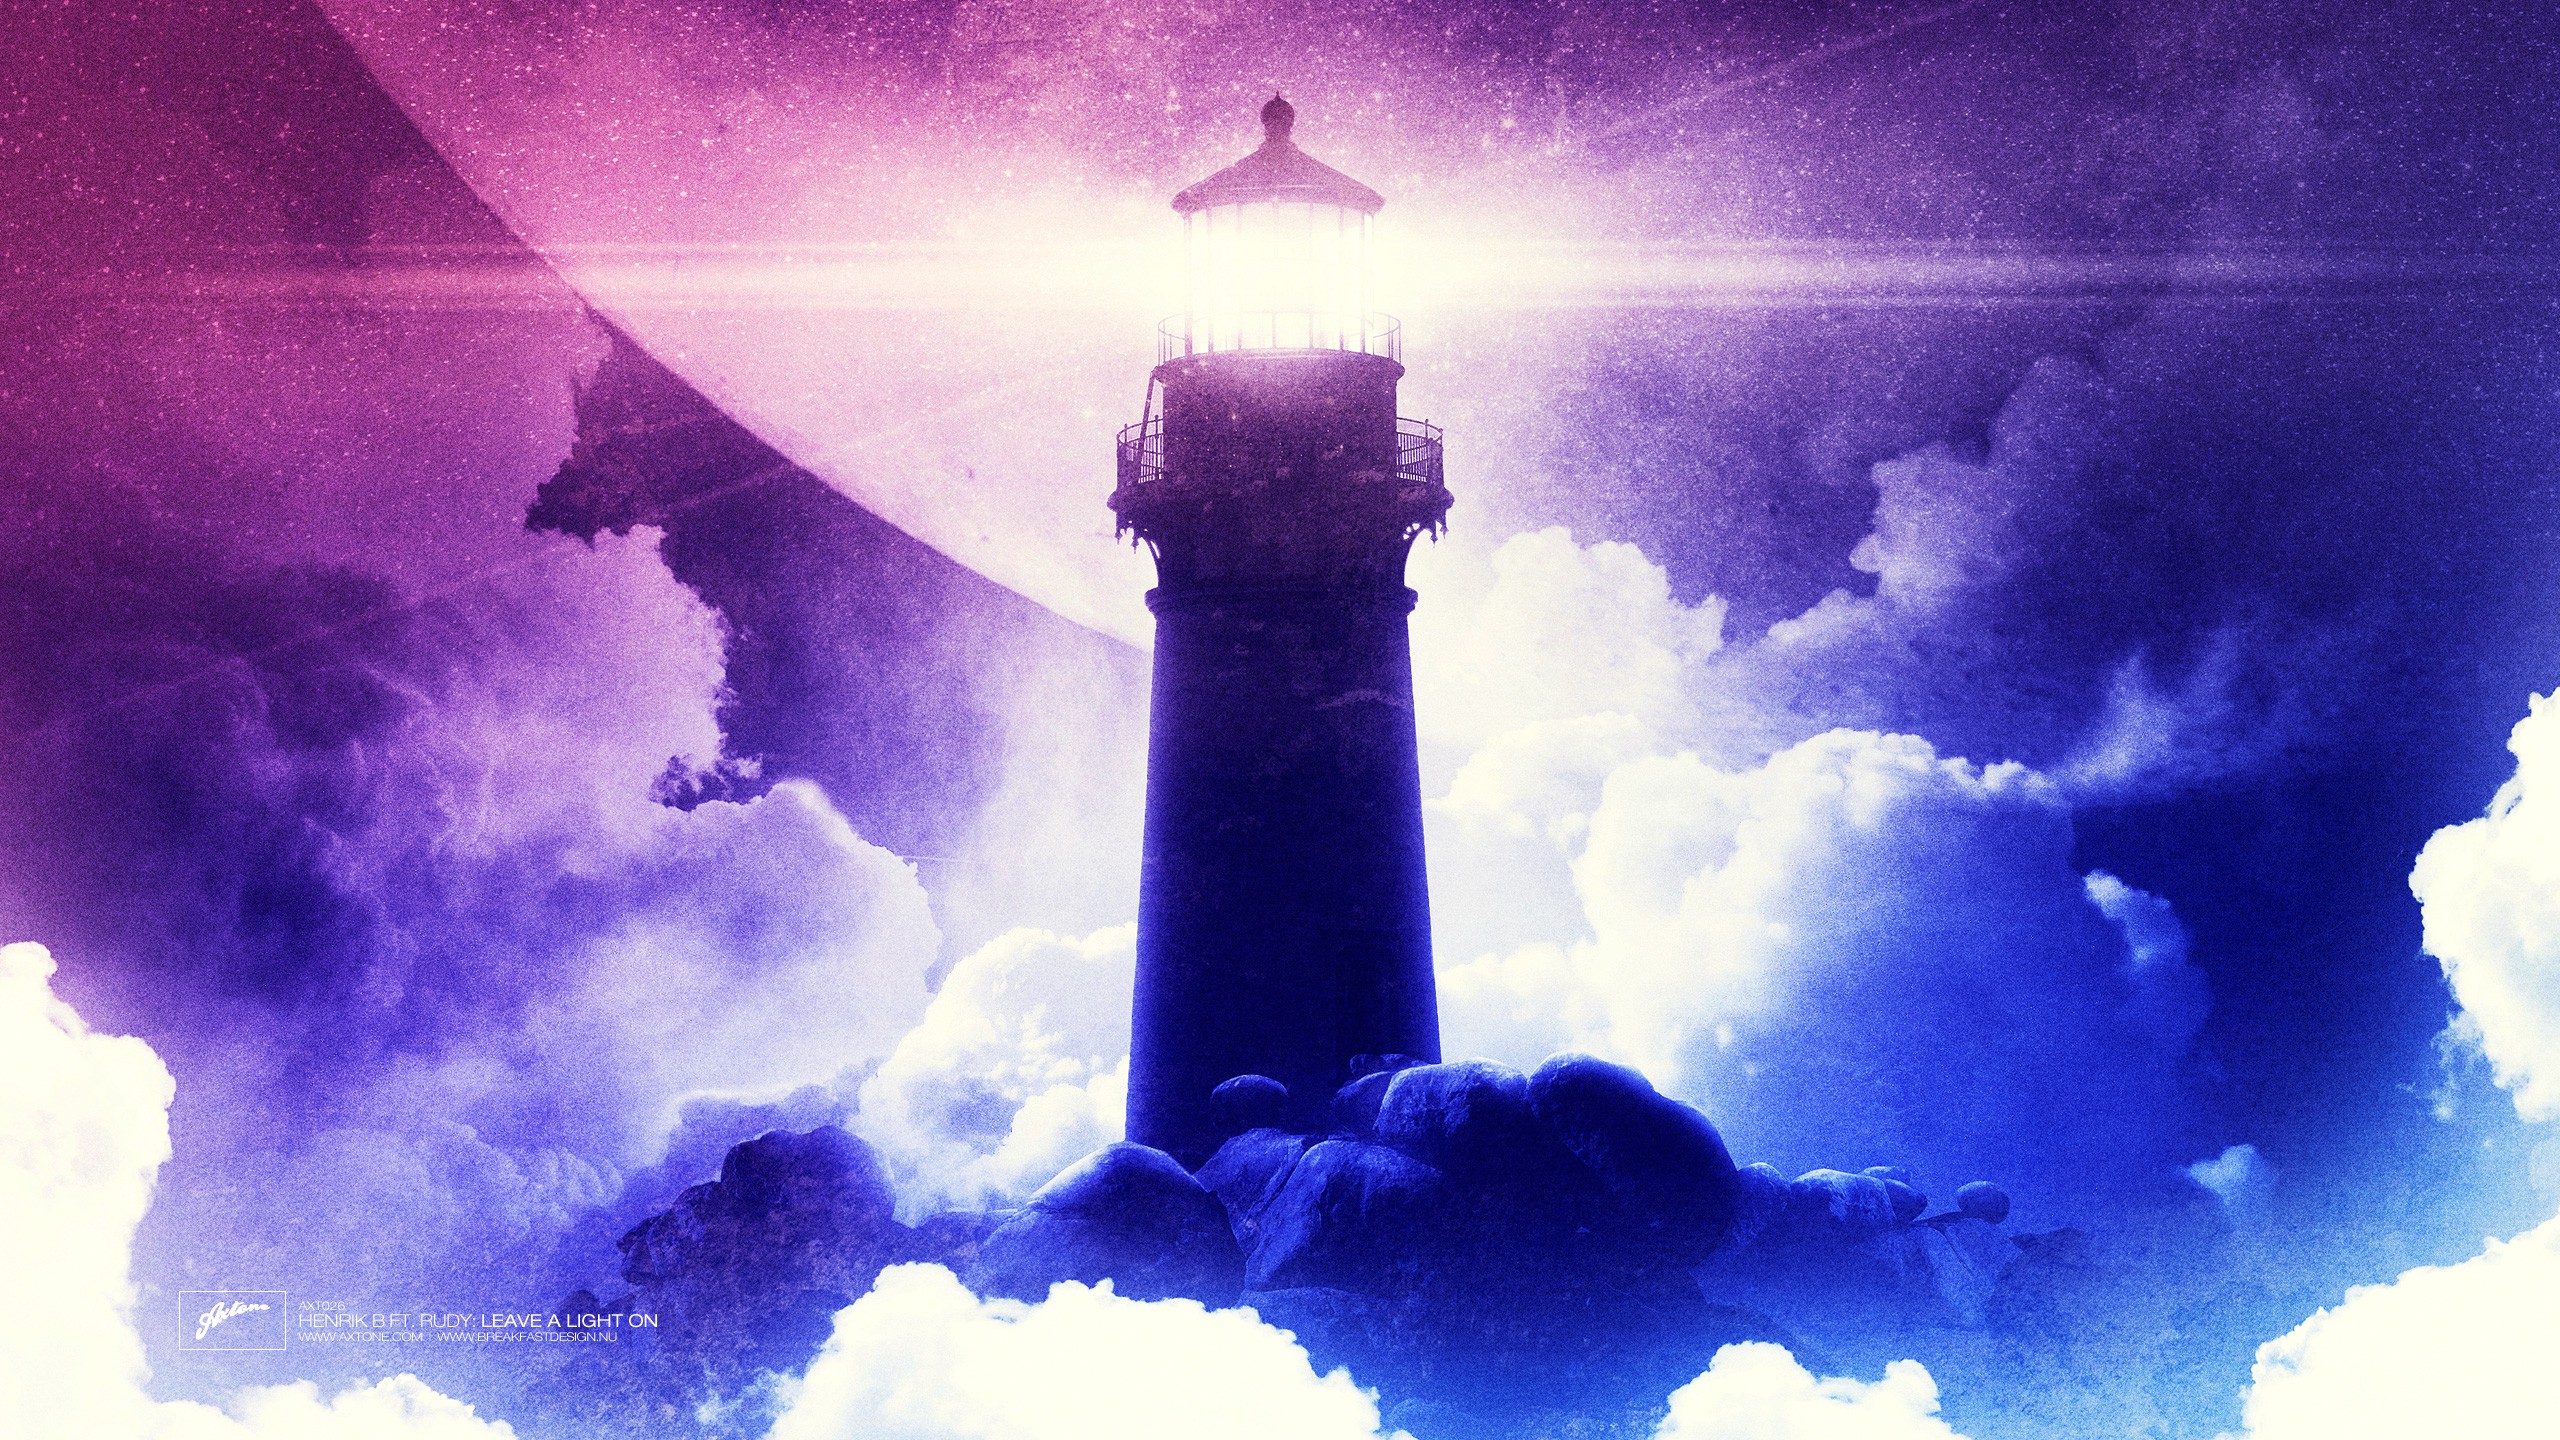 General 2560x1440 Axwell Eternal Sunshine of the Spotless Mind lights fantasy art lighthouse clouds sky artwork digital art